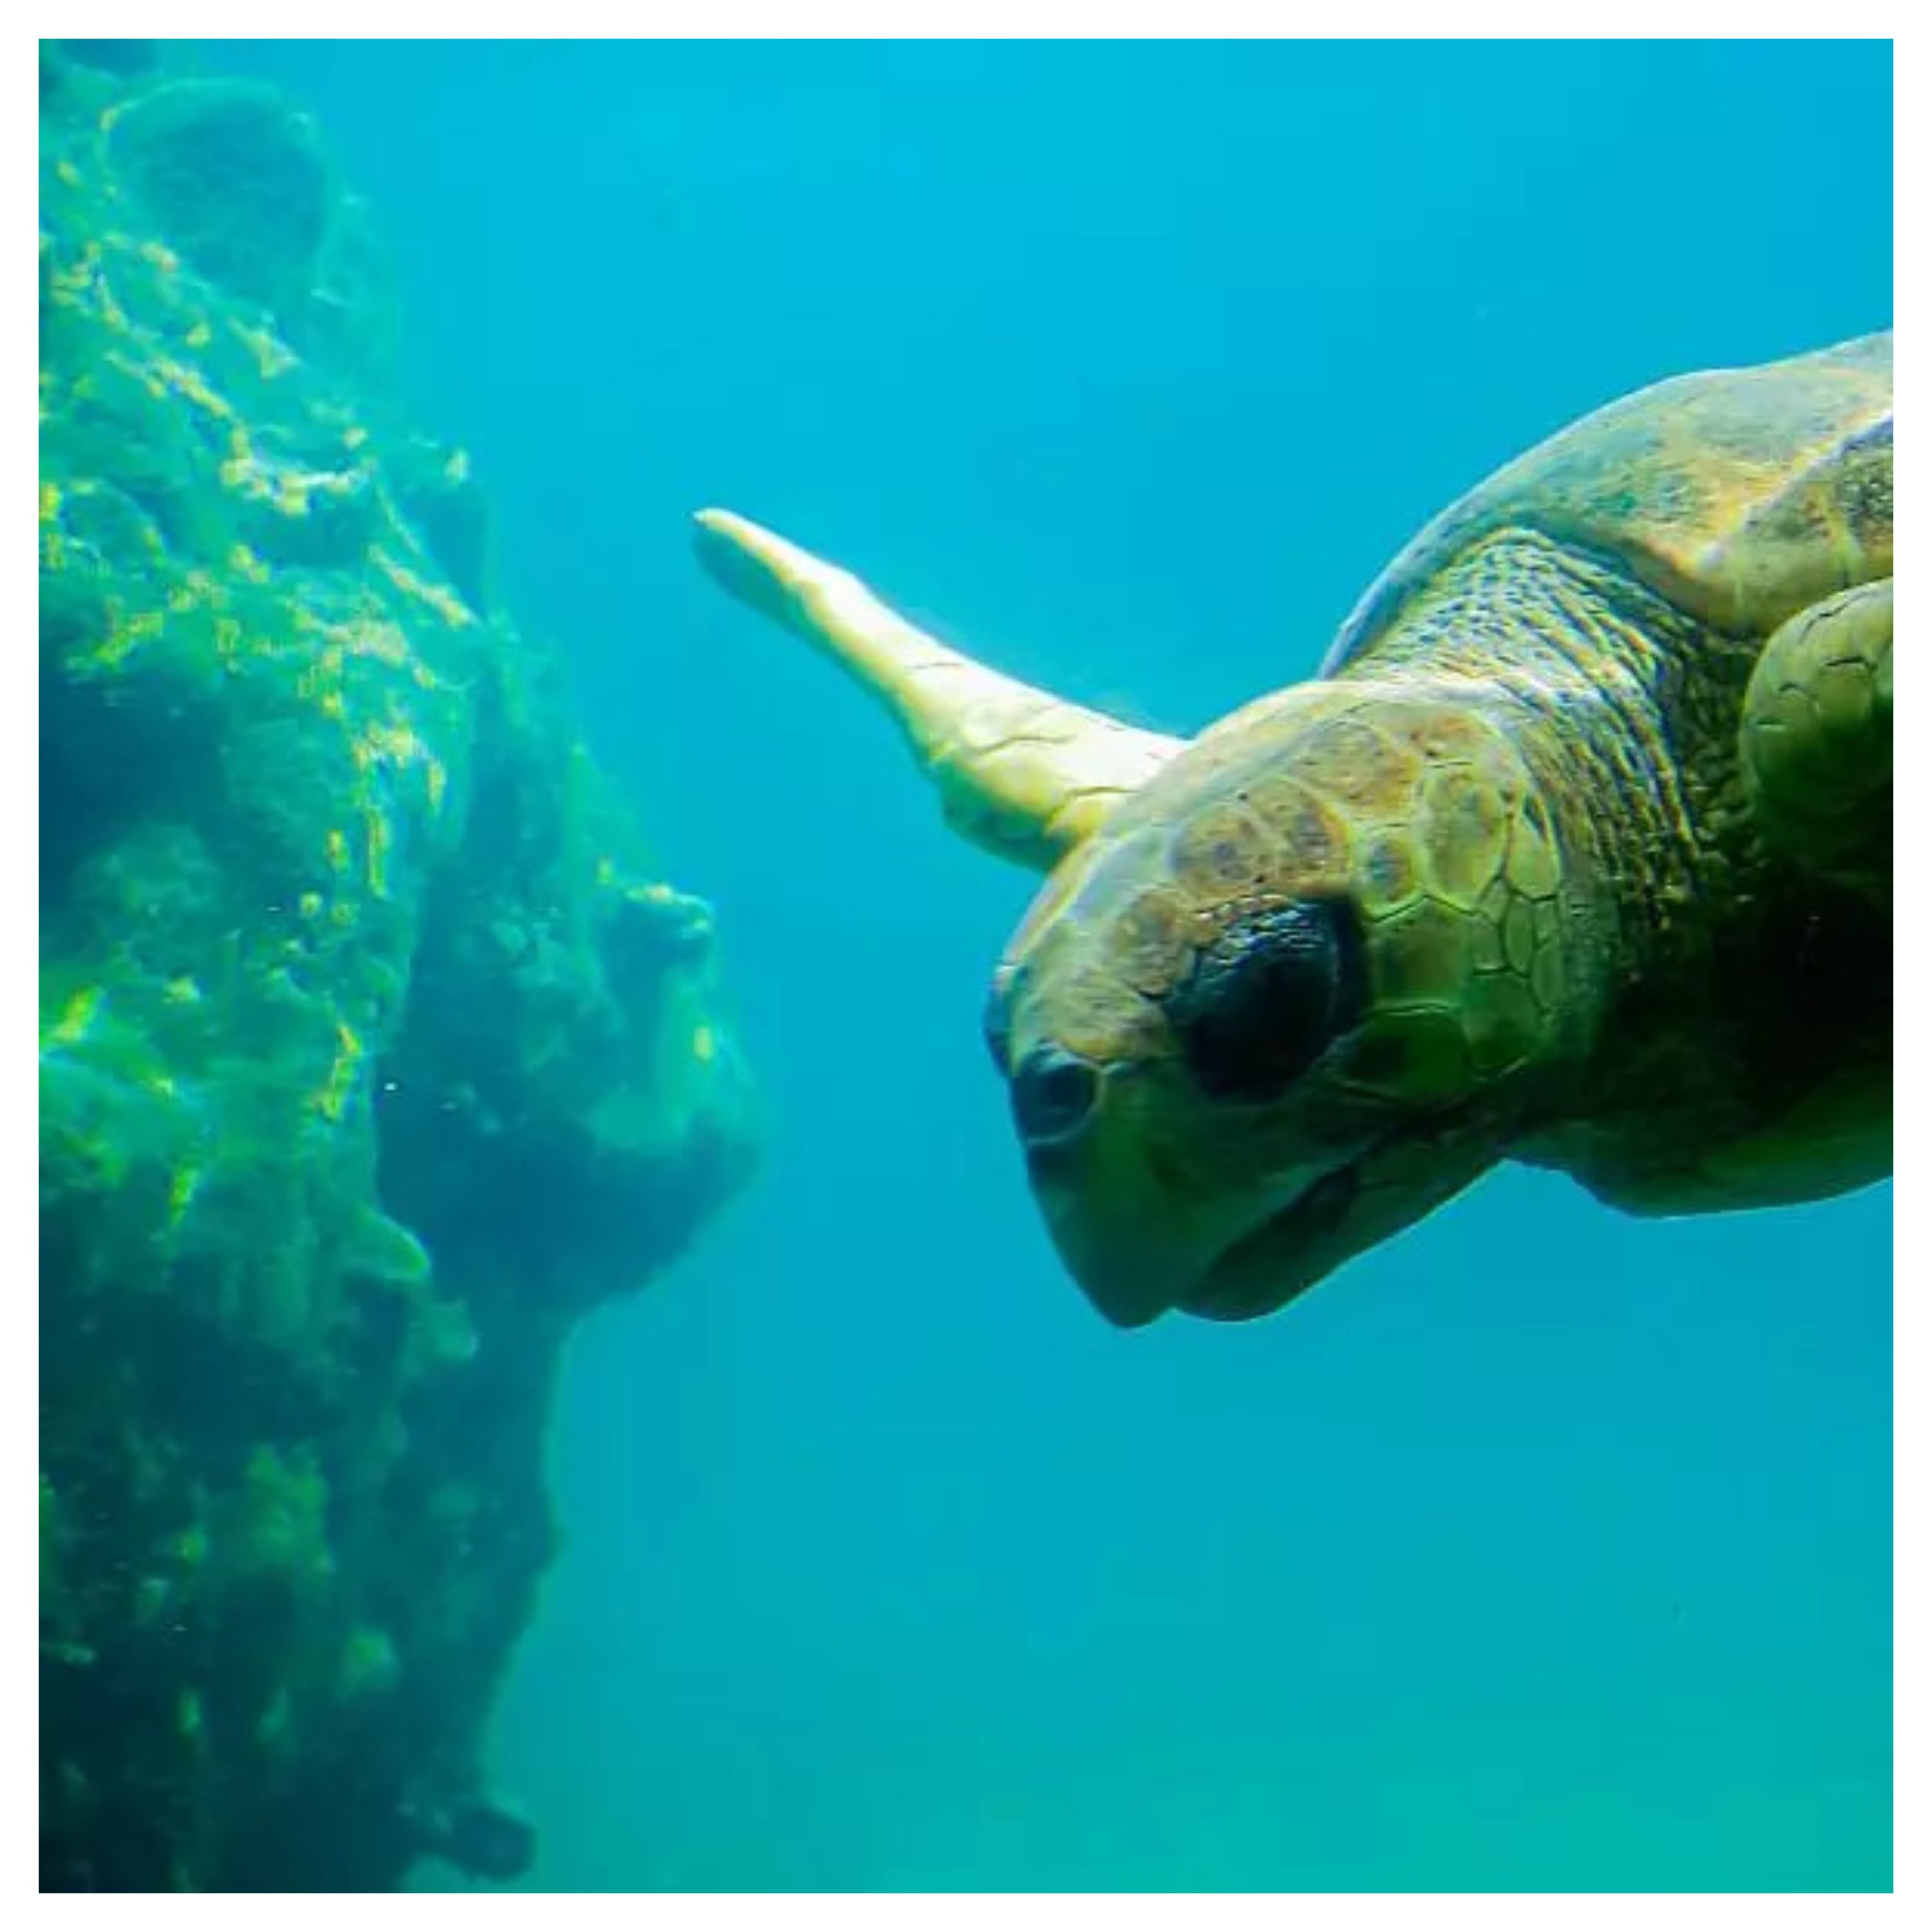 Image de tortue marine 